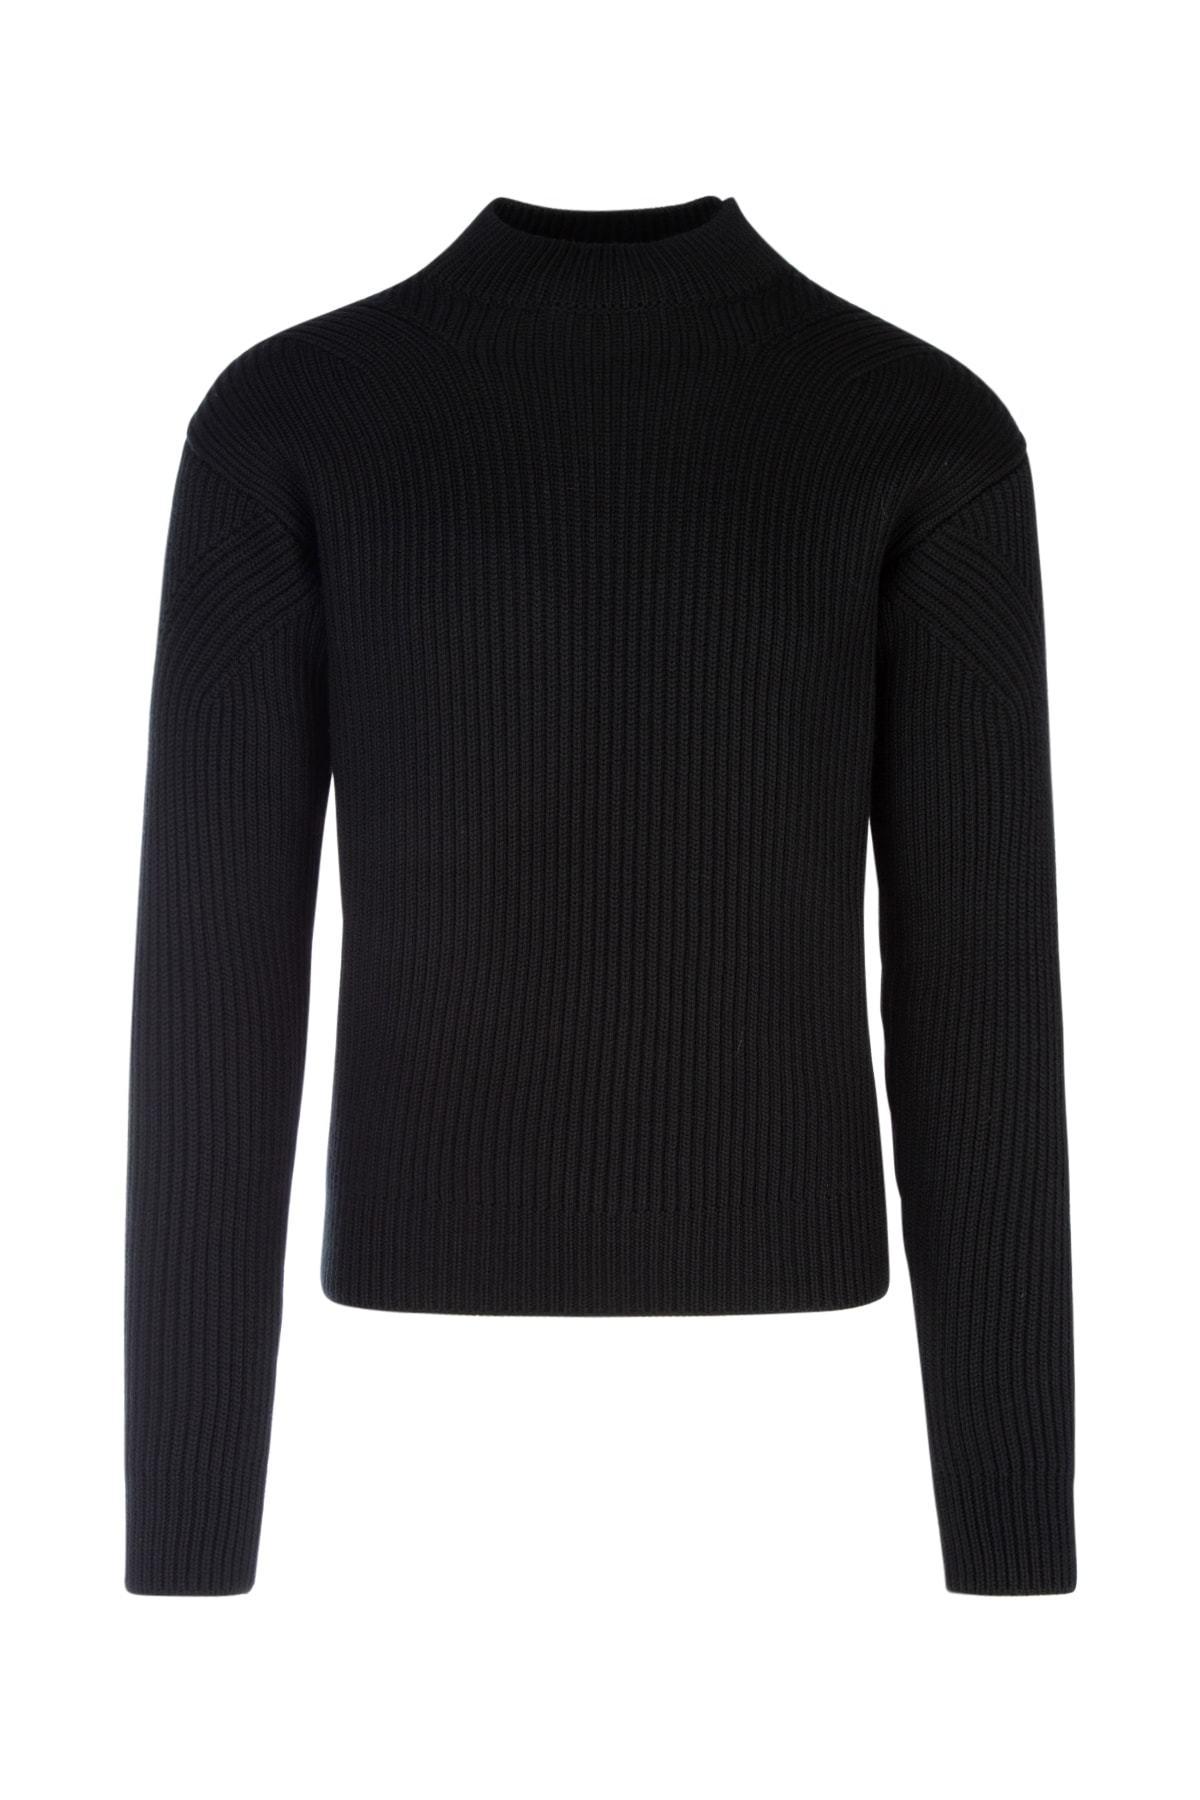 Prada Synthetic Knitted Turtleneck Jumper in Black for Men - Lyst